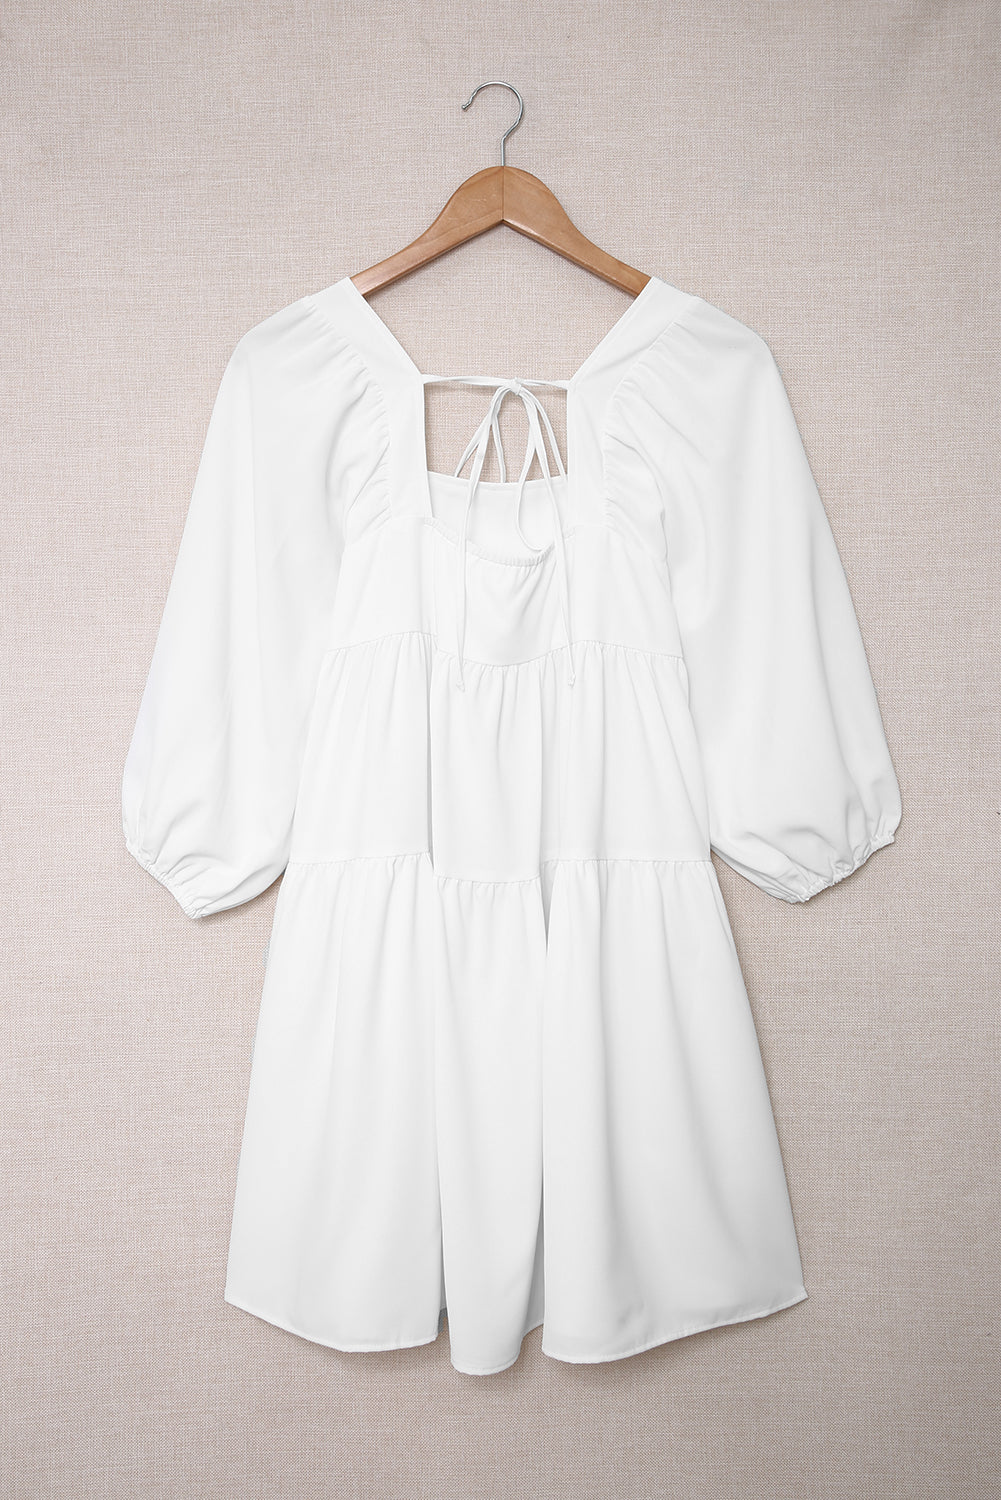 Mini-robe blanche à col carré, demi-manches, haute et basse